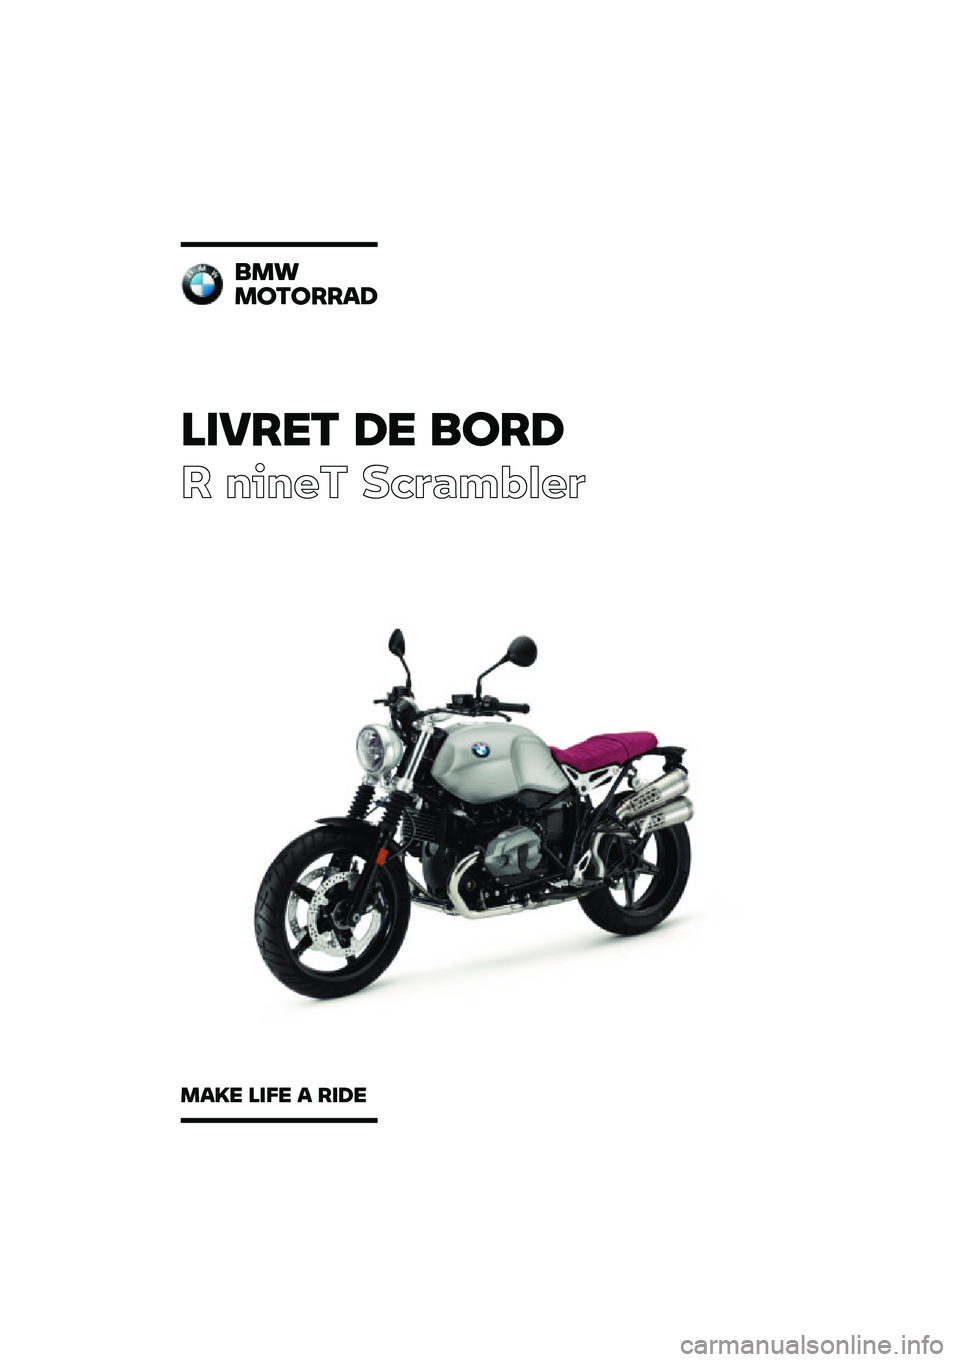 BMW MOTORRAD R NINE T SCRAMBLER 2020  Livret de bord (in French) ������ �\b� �	�
��\b
� ����� ��\b�	�
��\f�
��	
�	��\f
��
��
���
�\b
��
�� ���� �
 ���\b� 